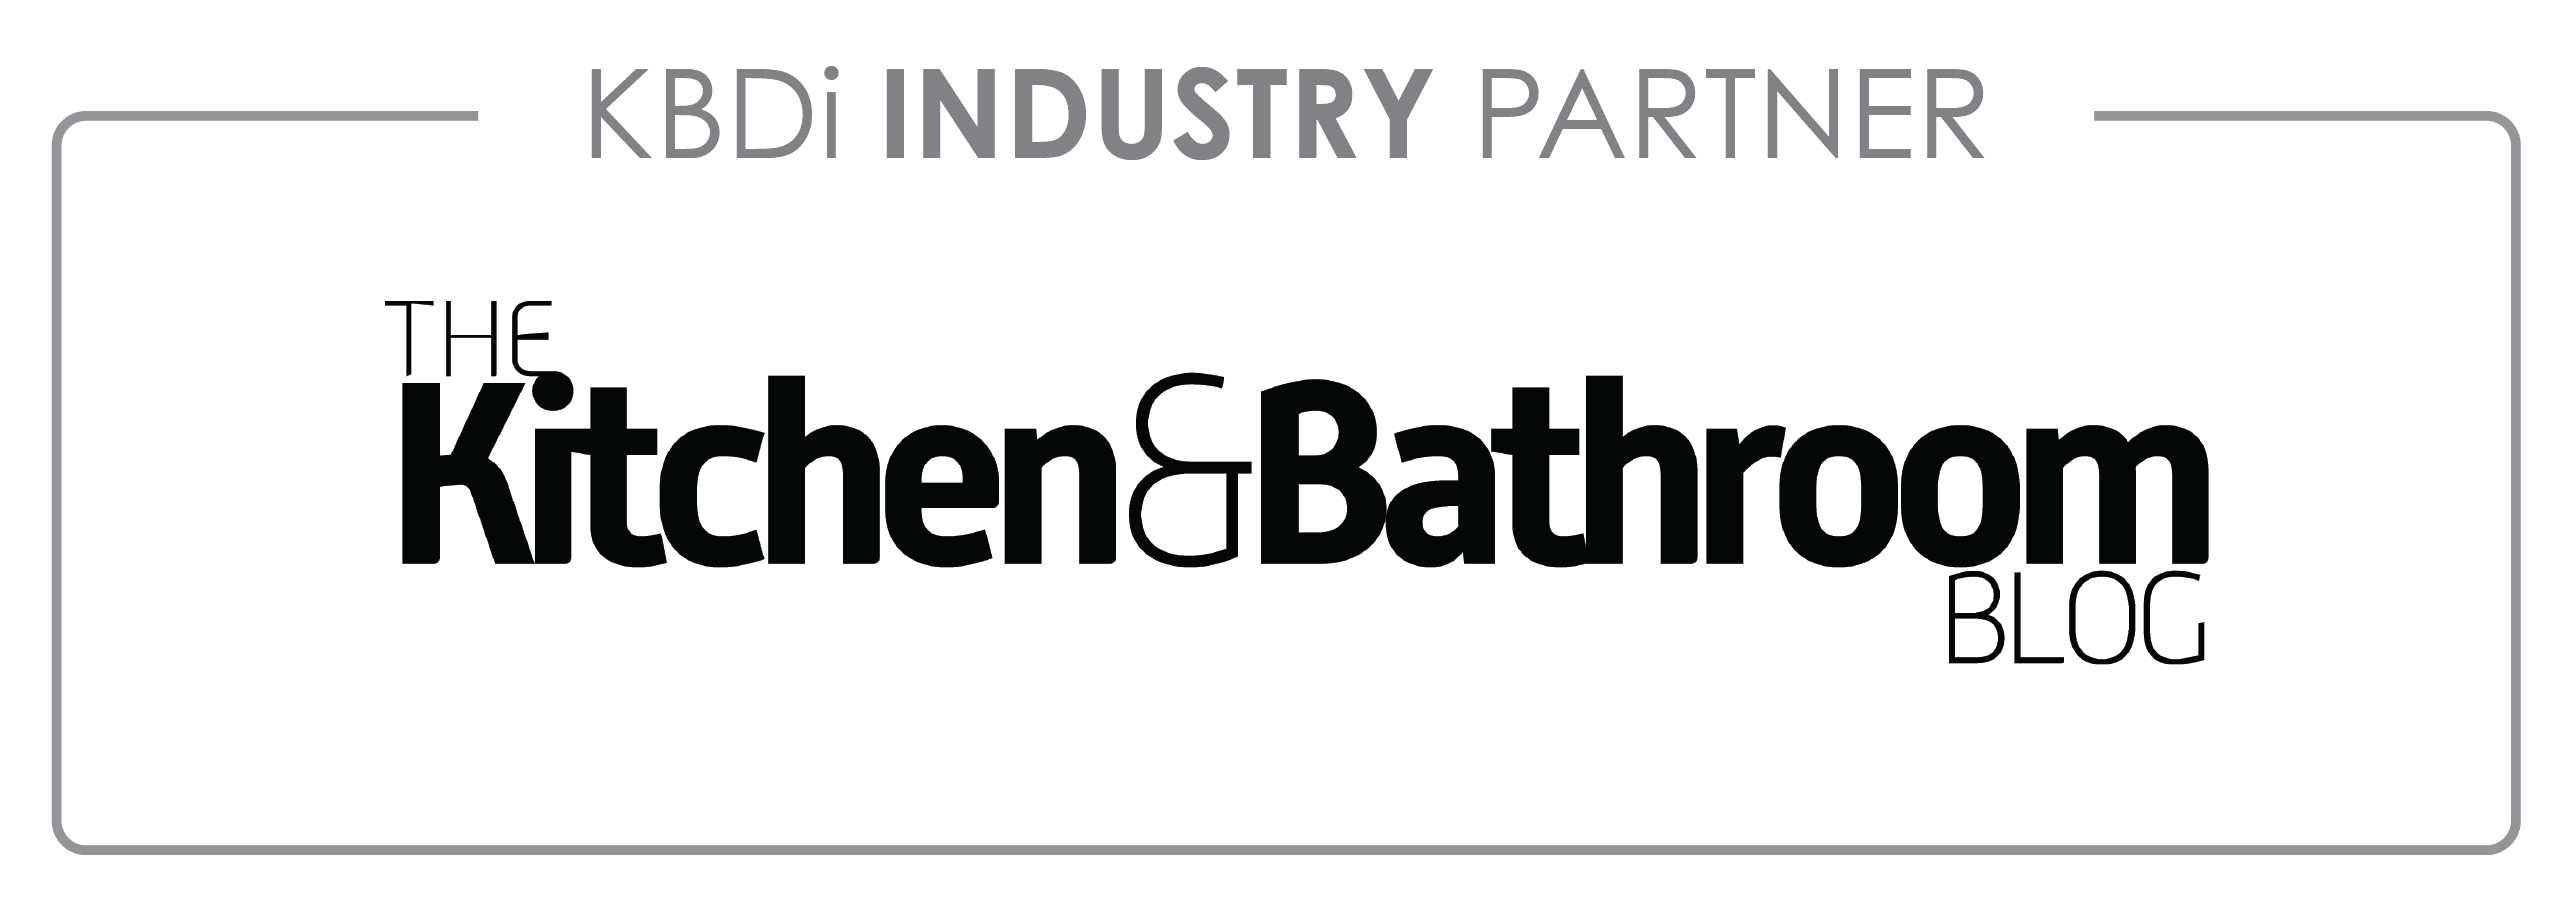 KBDi Industry Partner The Kitchen & Bathroom Blog